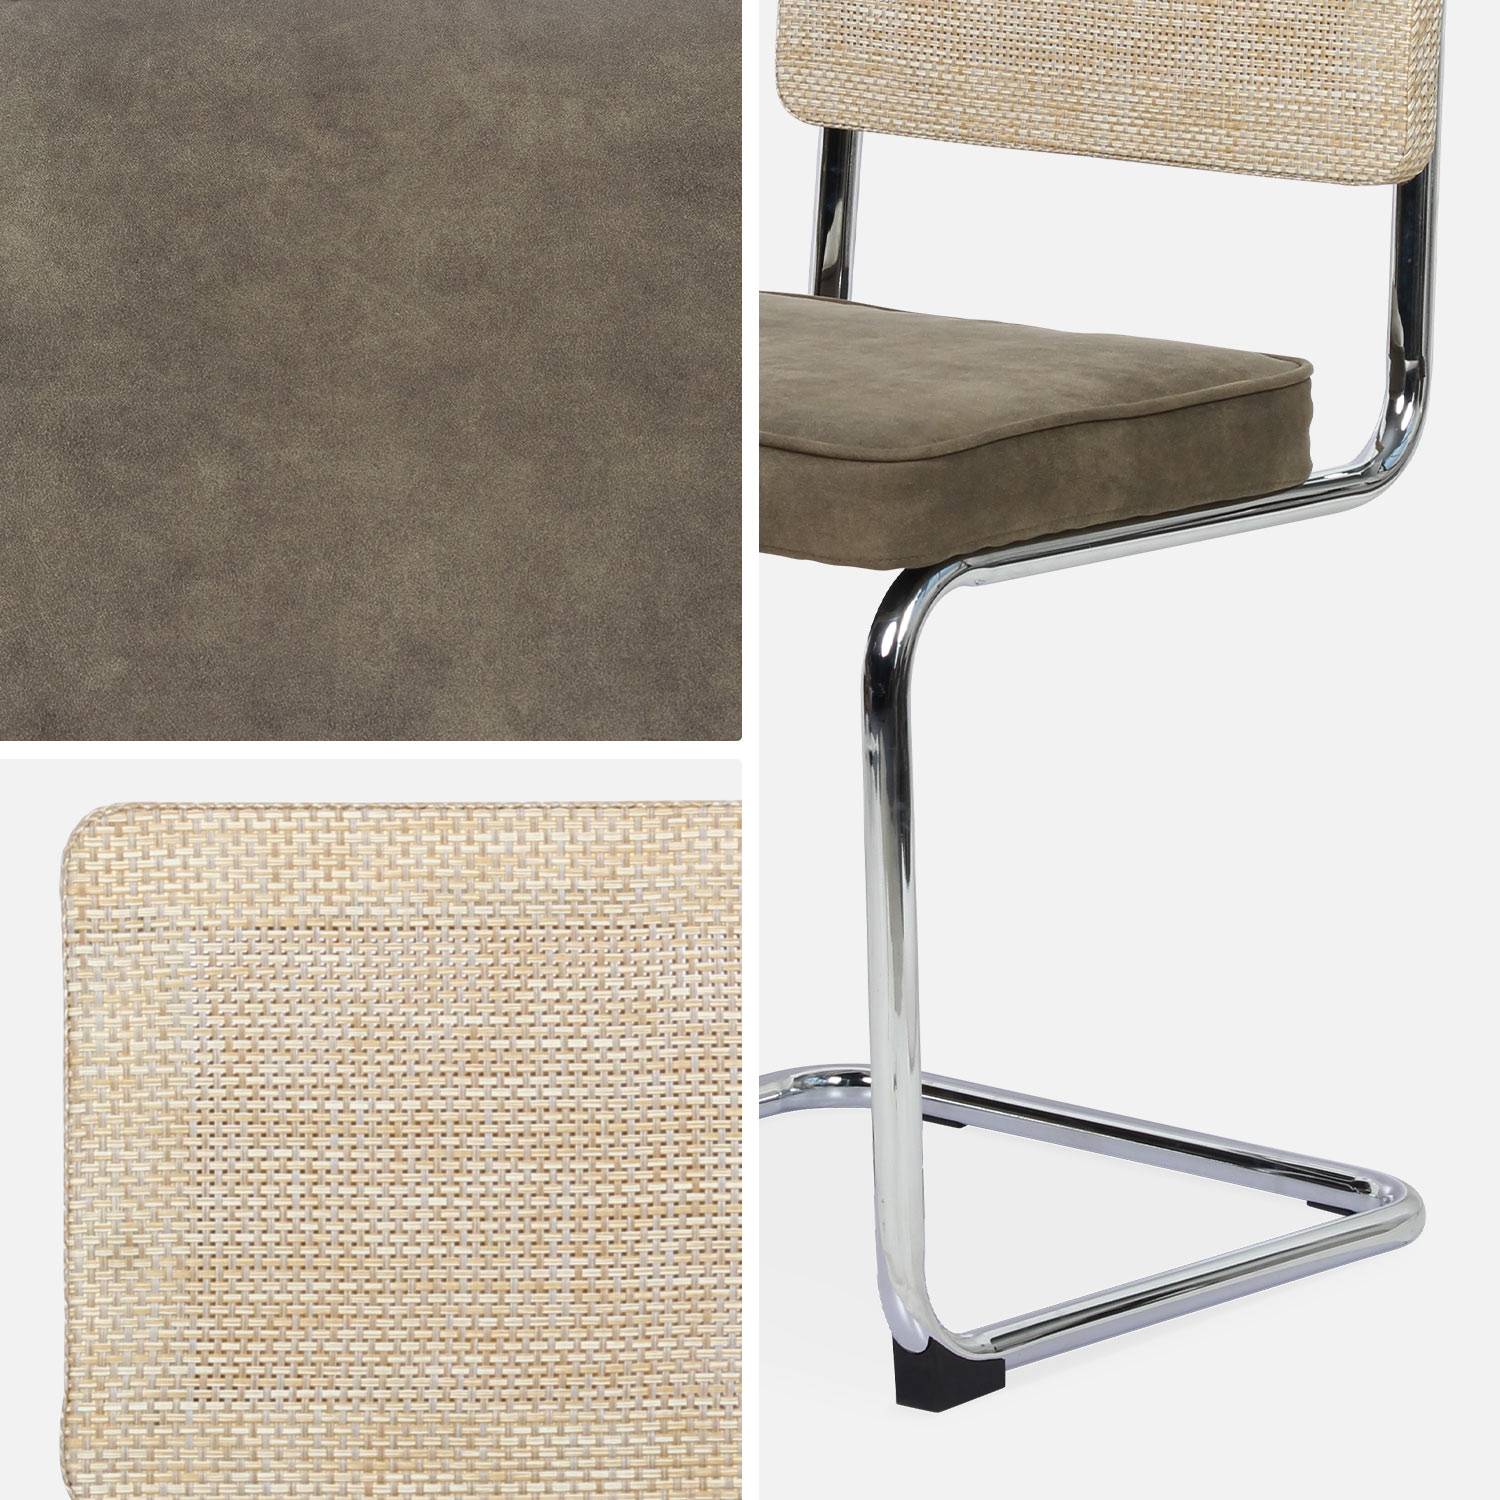 2 chaises cantilever - Maja - tissu kaki et résine effet rotin, 46 x 54,5 x 84,5cm   Photo8